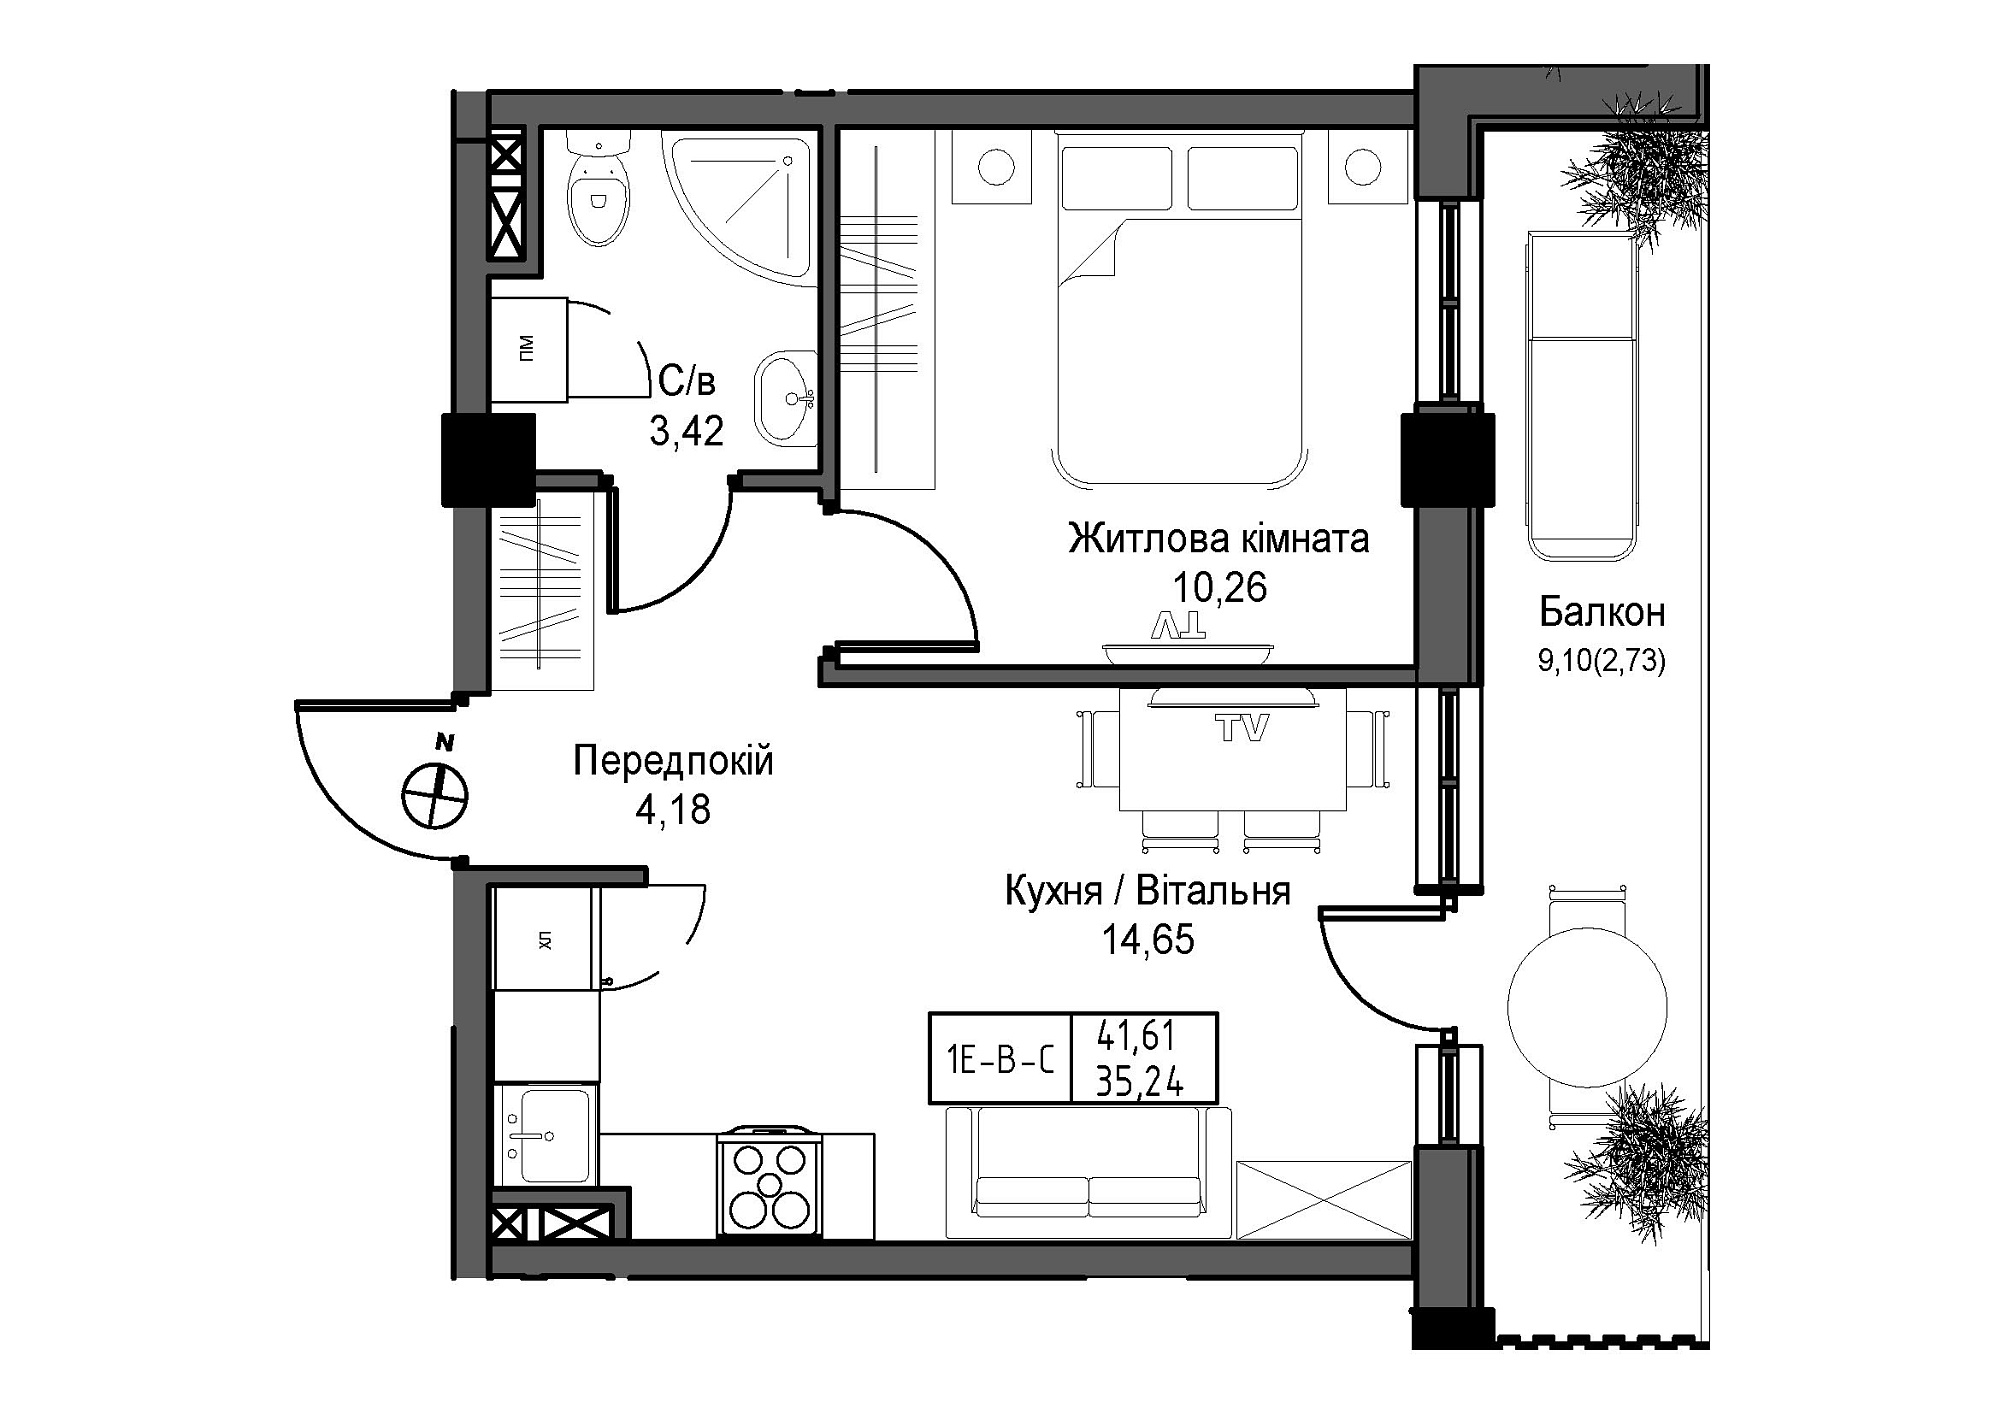 Планування 1-к квартира площею 35.24м2, UM-007-08/0004.